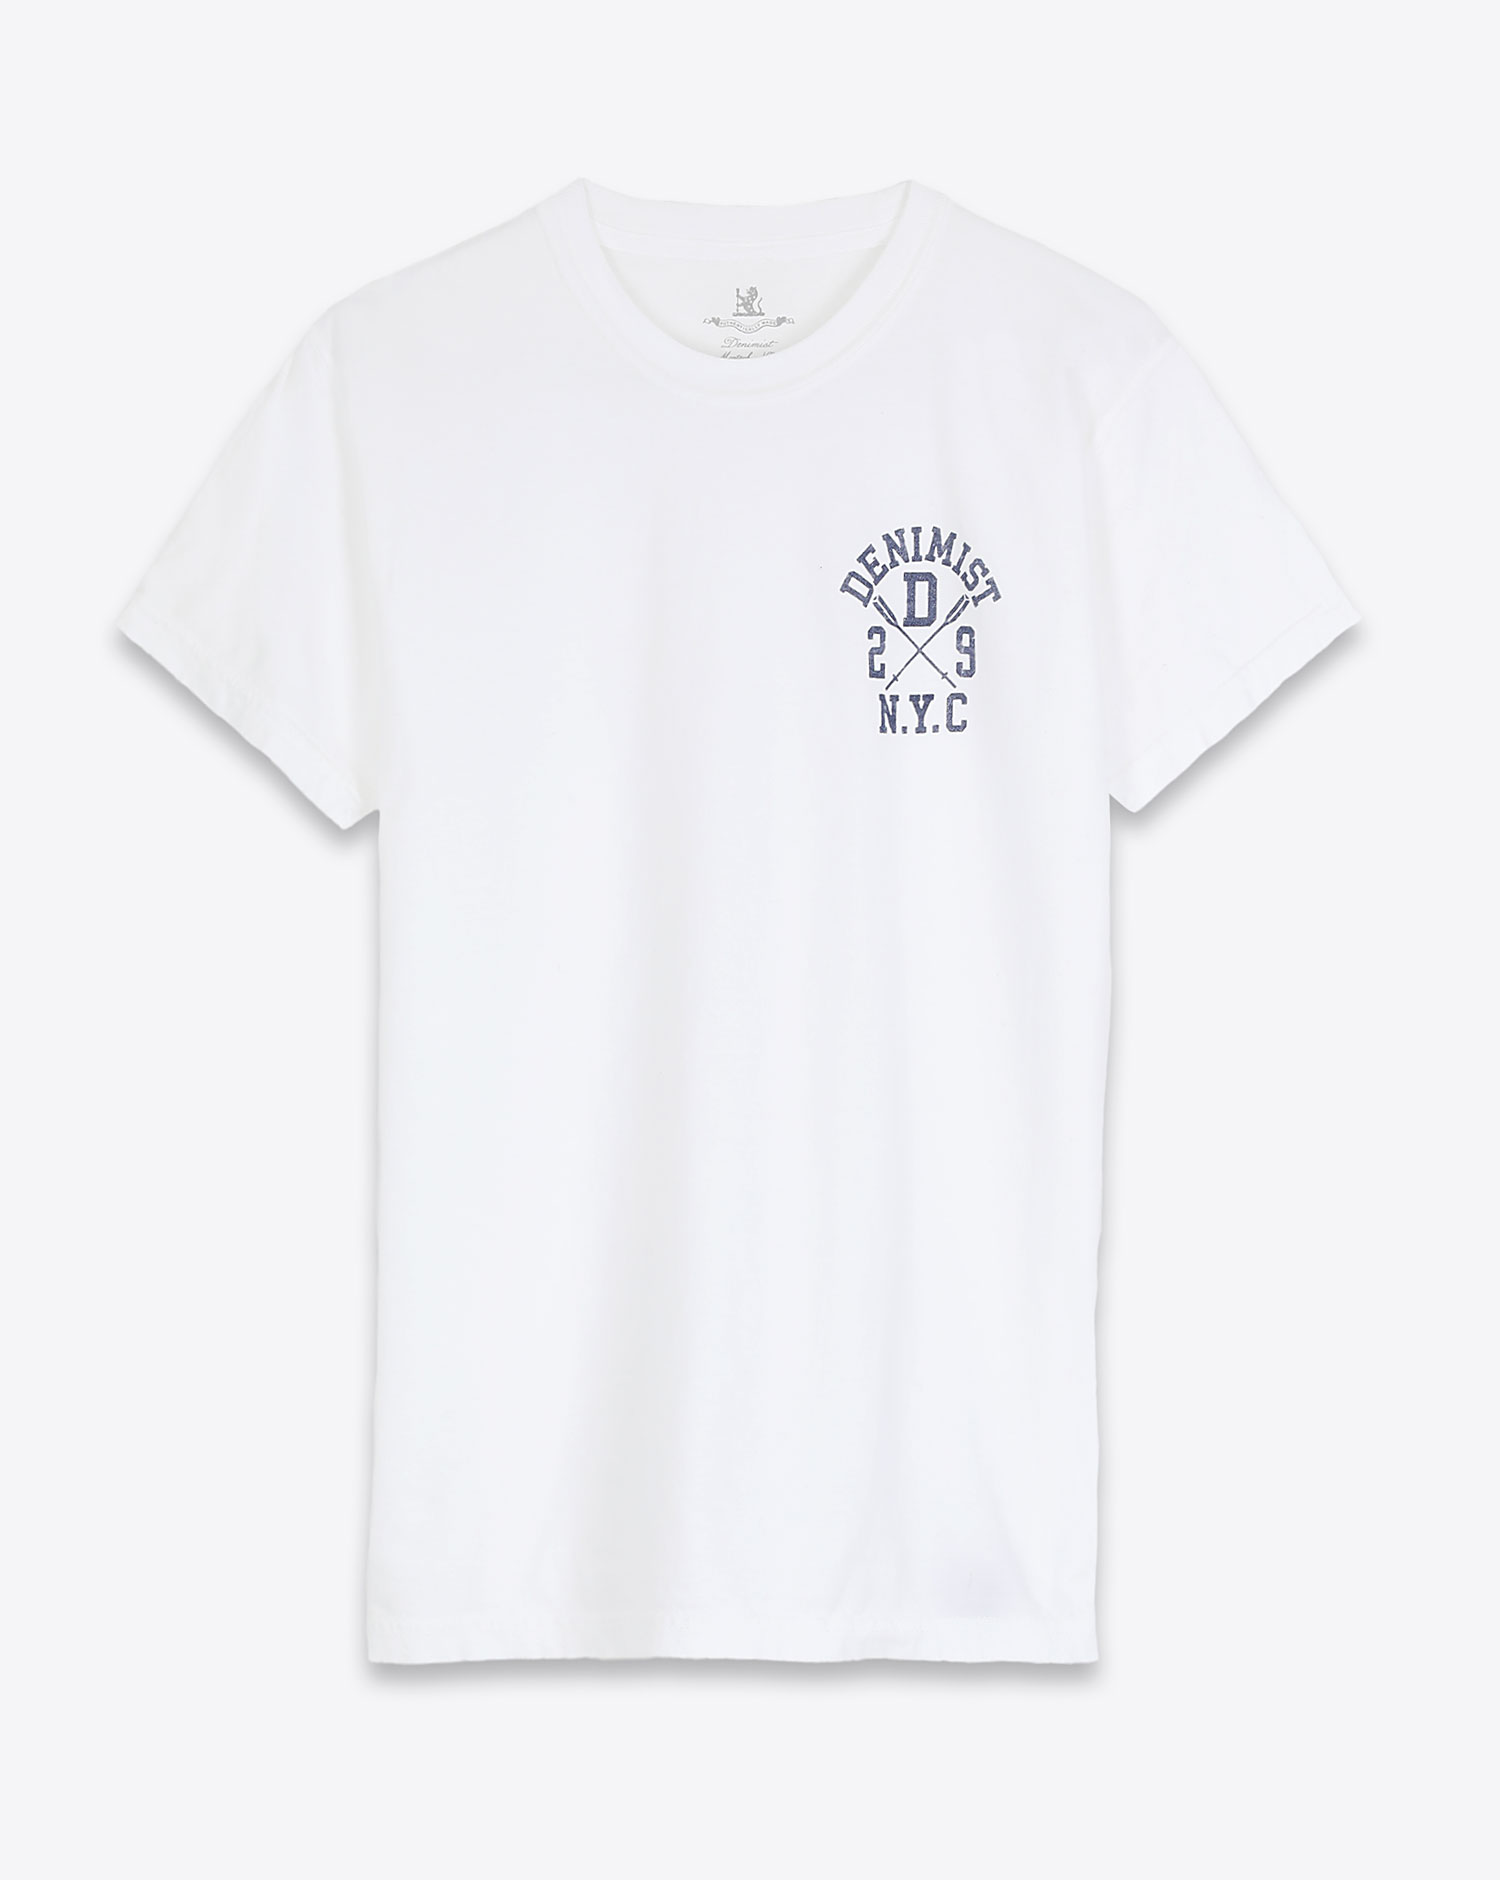 Denimist Rowing Team Classic Tee. Tee-shirt blanc logo poitrine Denimist. 